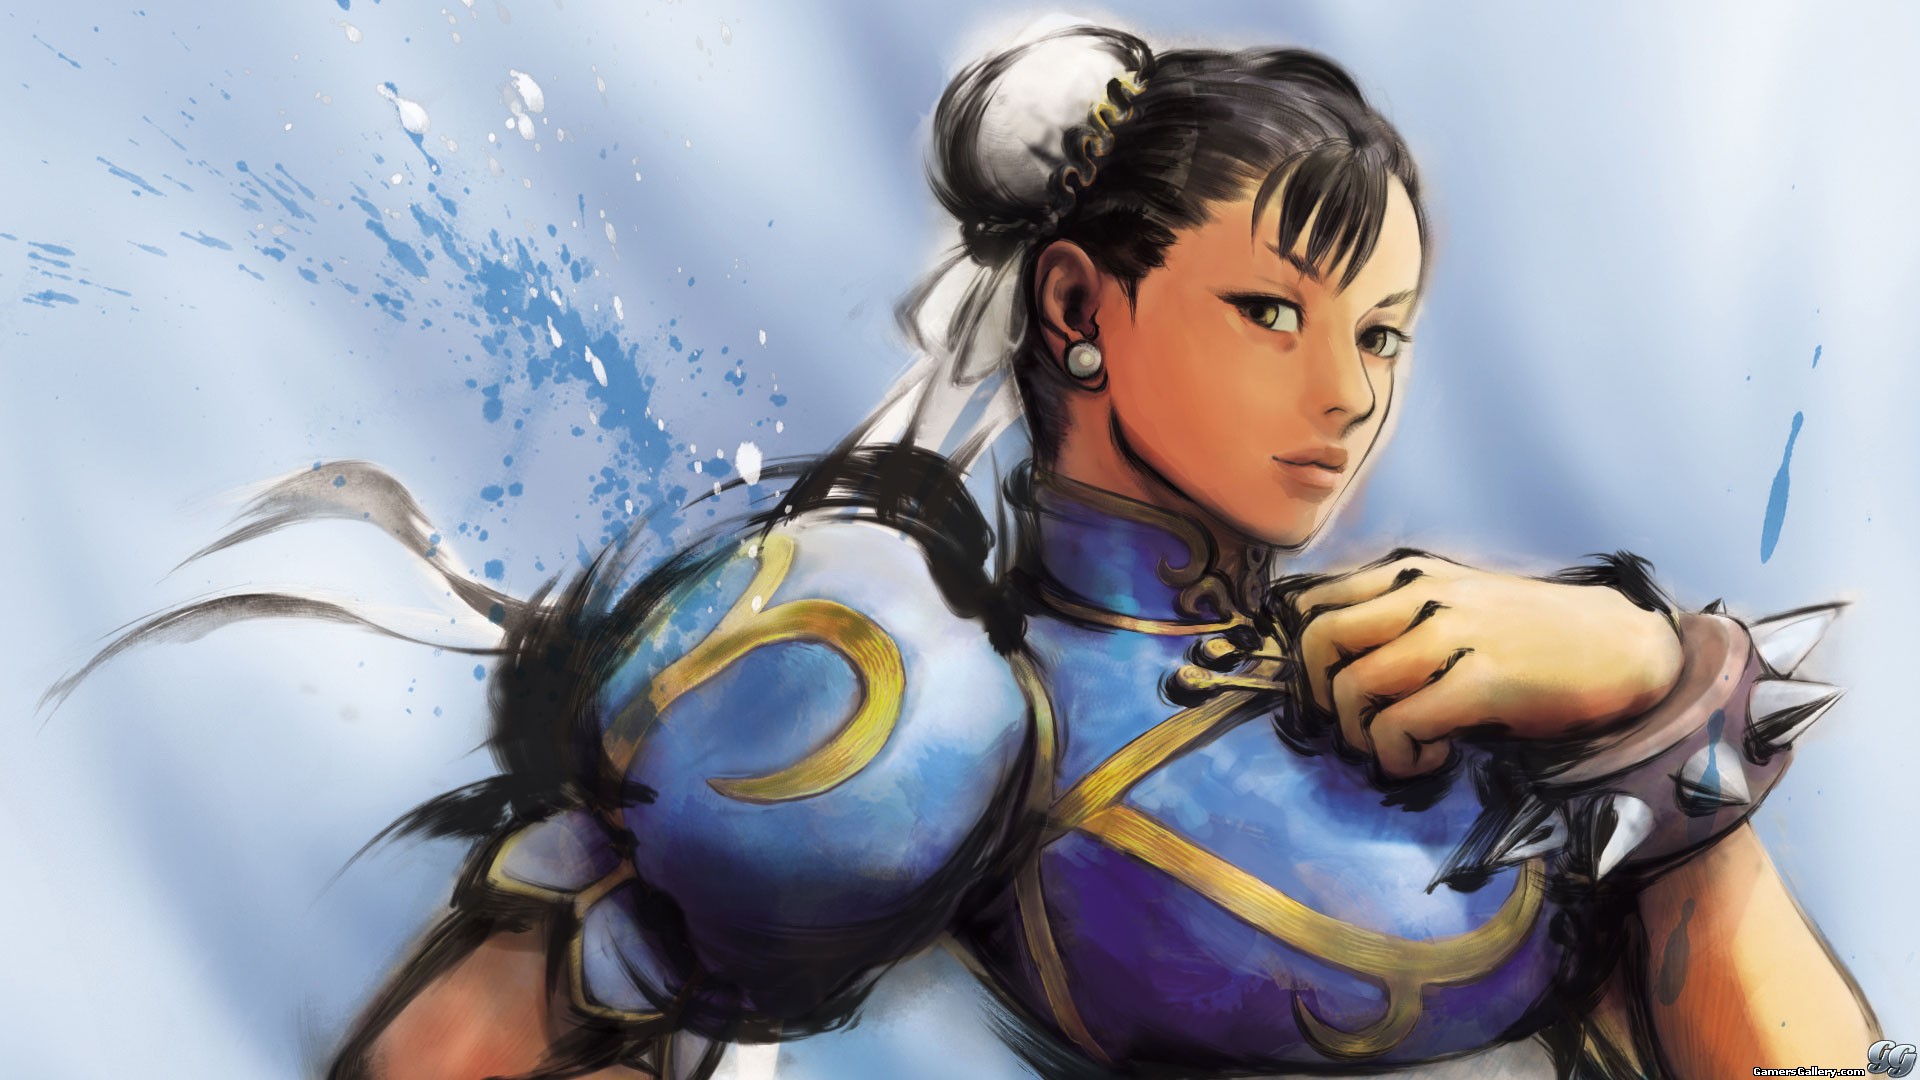 Wallpaper : Chun Li, Street Fighter, video game characters, female warrior, artwork, Logan Cure ...